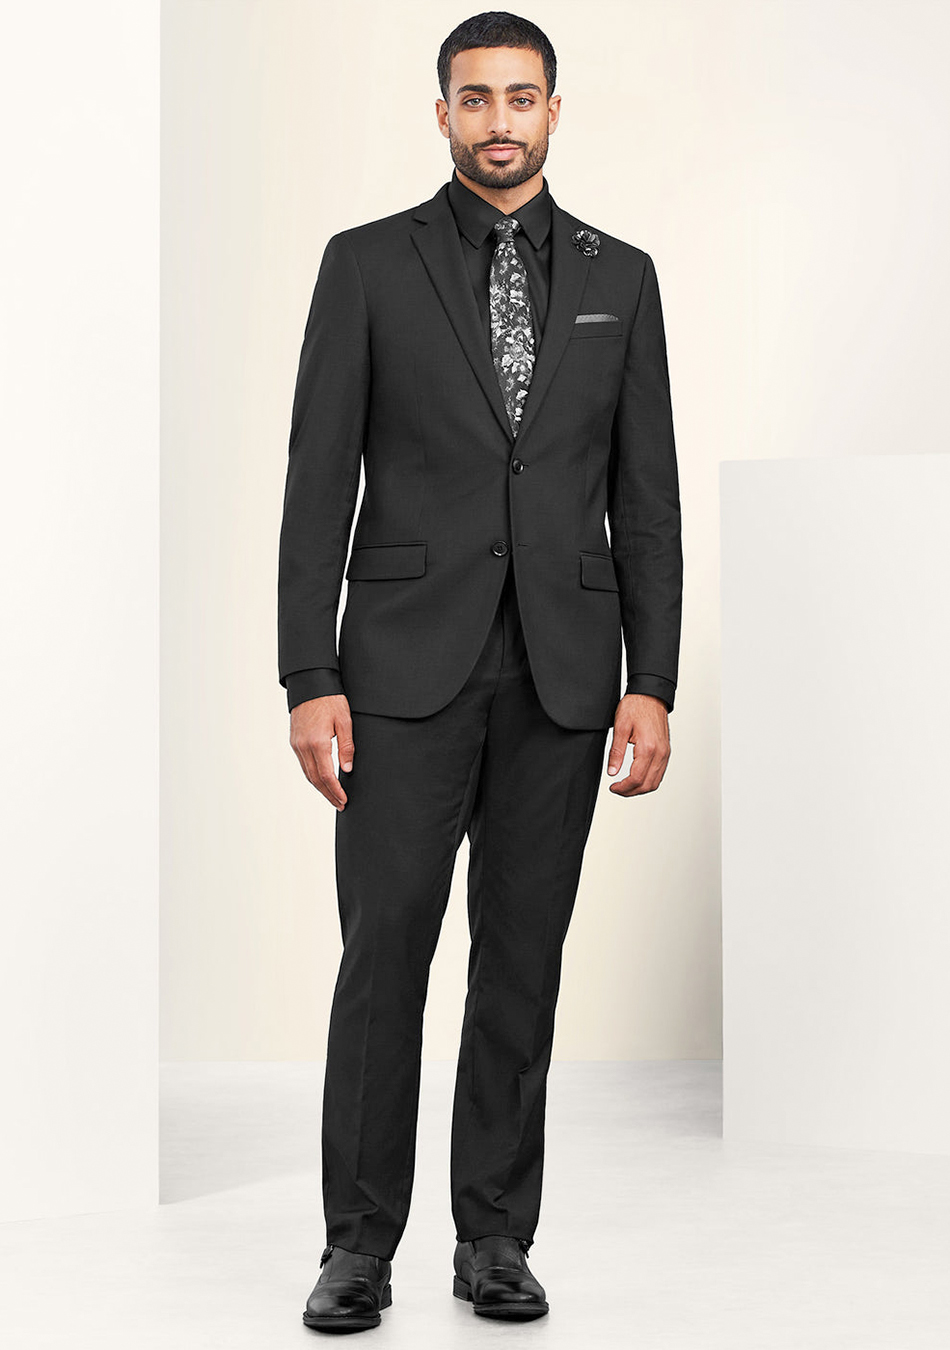 Full Black Attire ♠️ | Men's business outfits, Black attire, Black suits